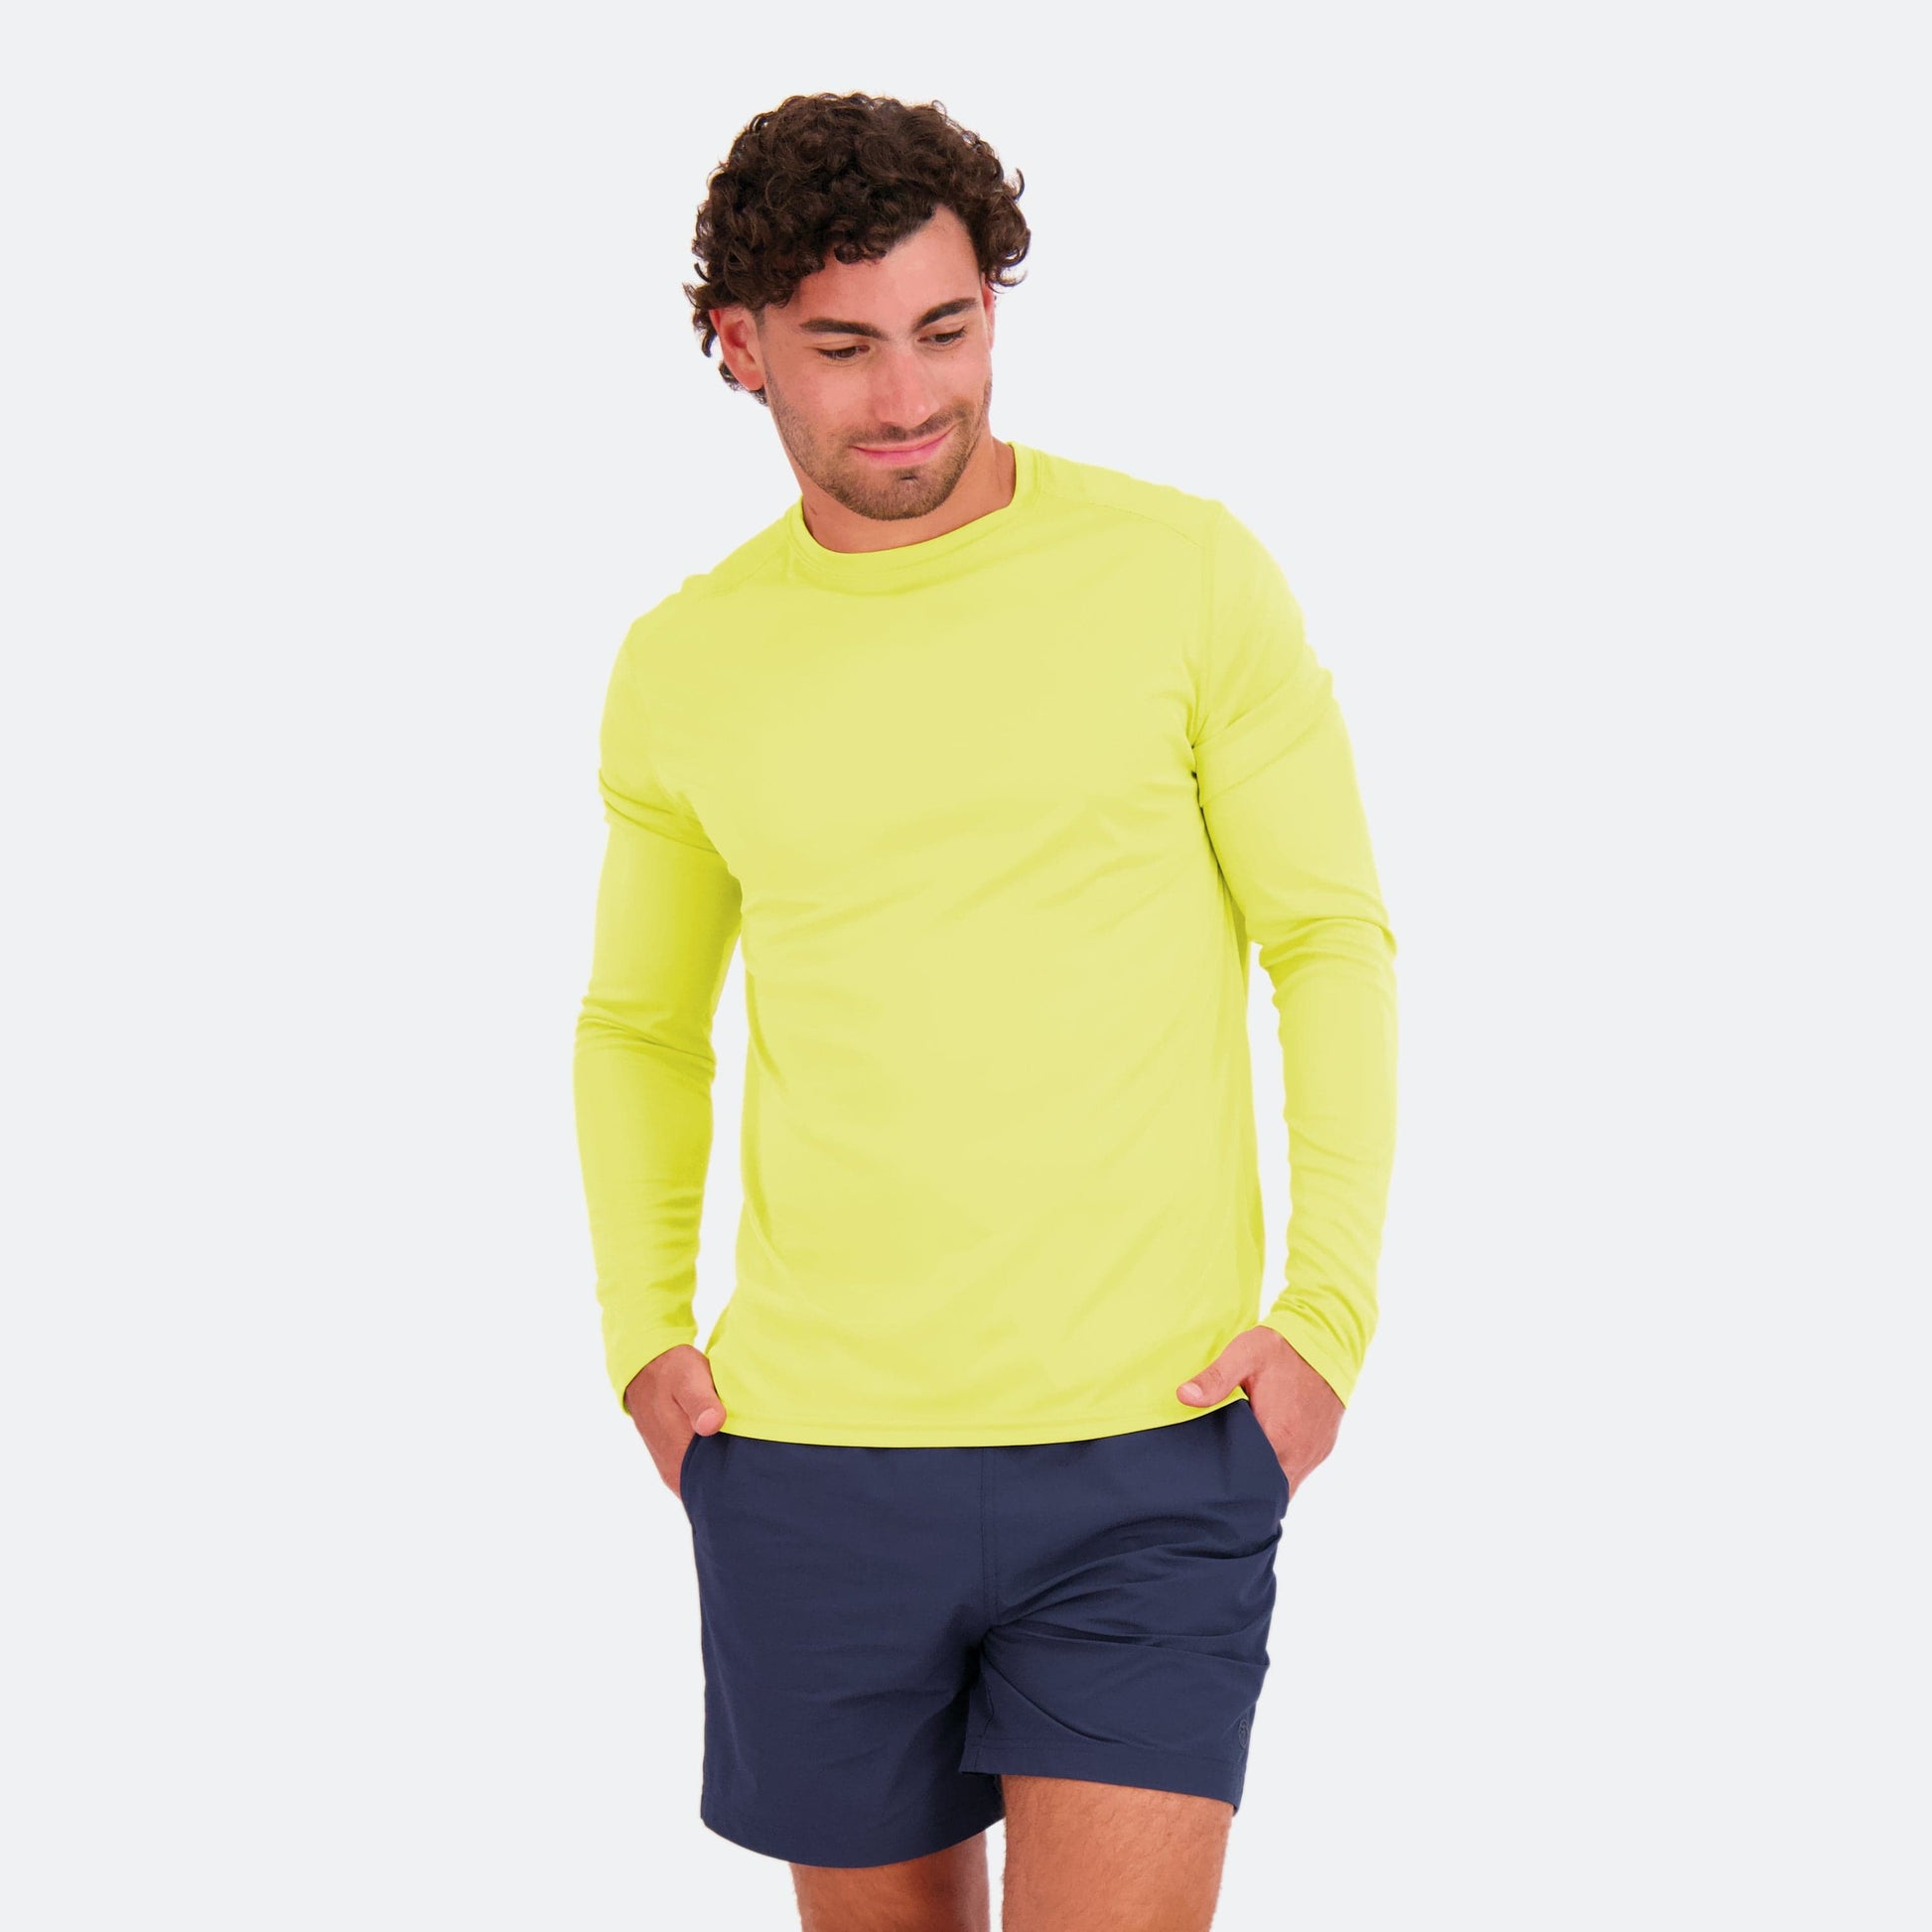 Vapor Elemental Wear Men's Eco Sol Shirt